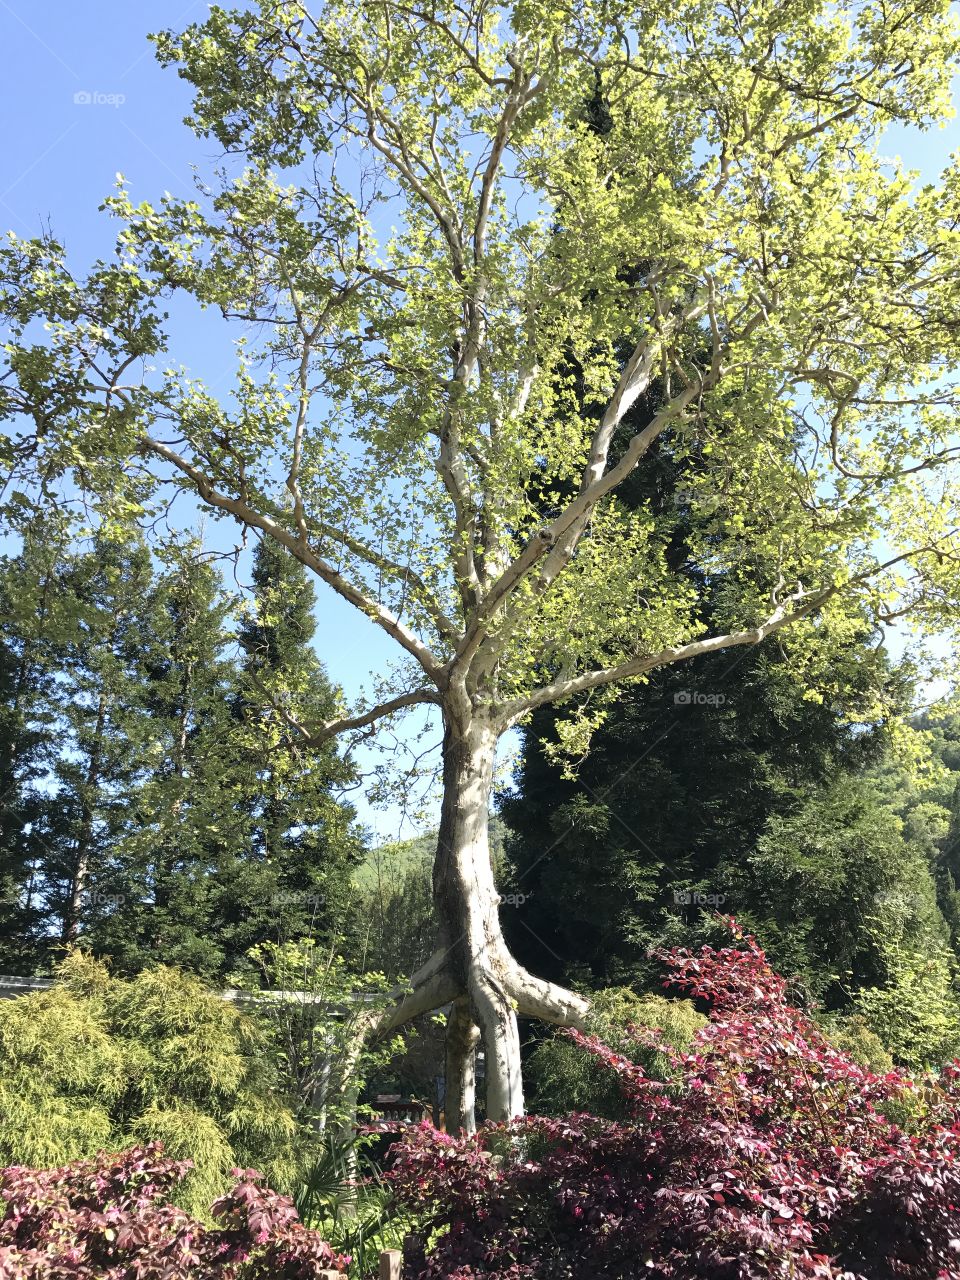 Cool tree